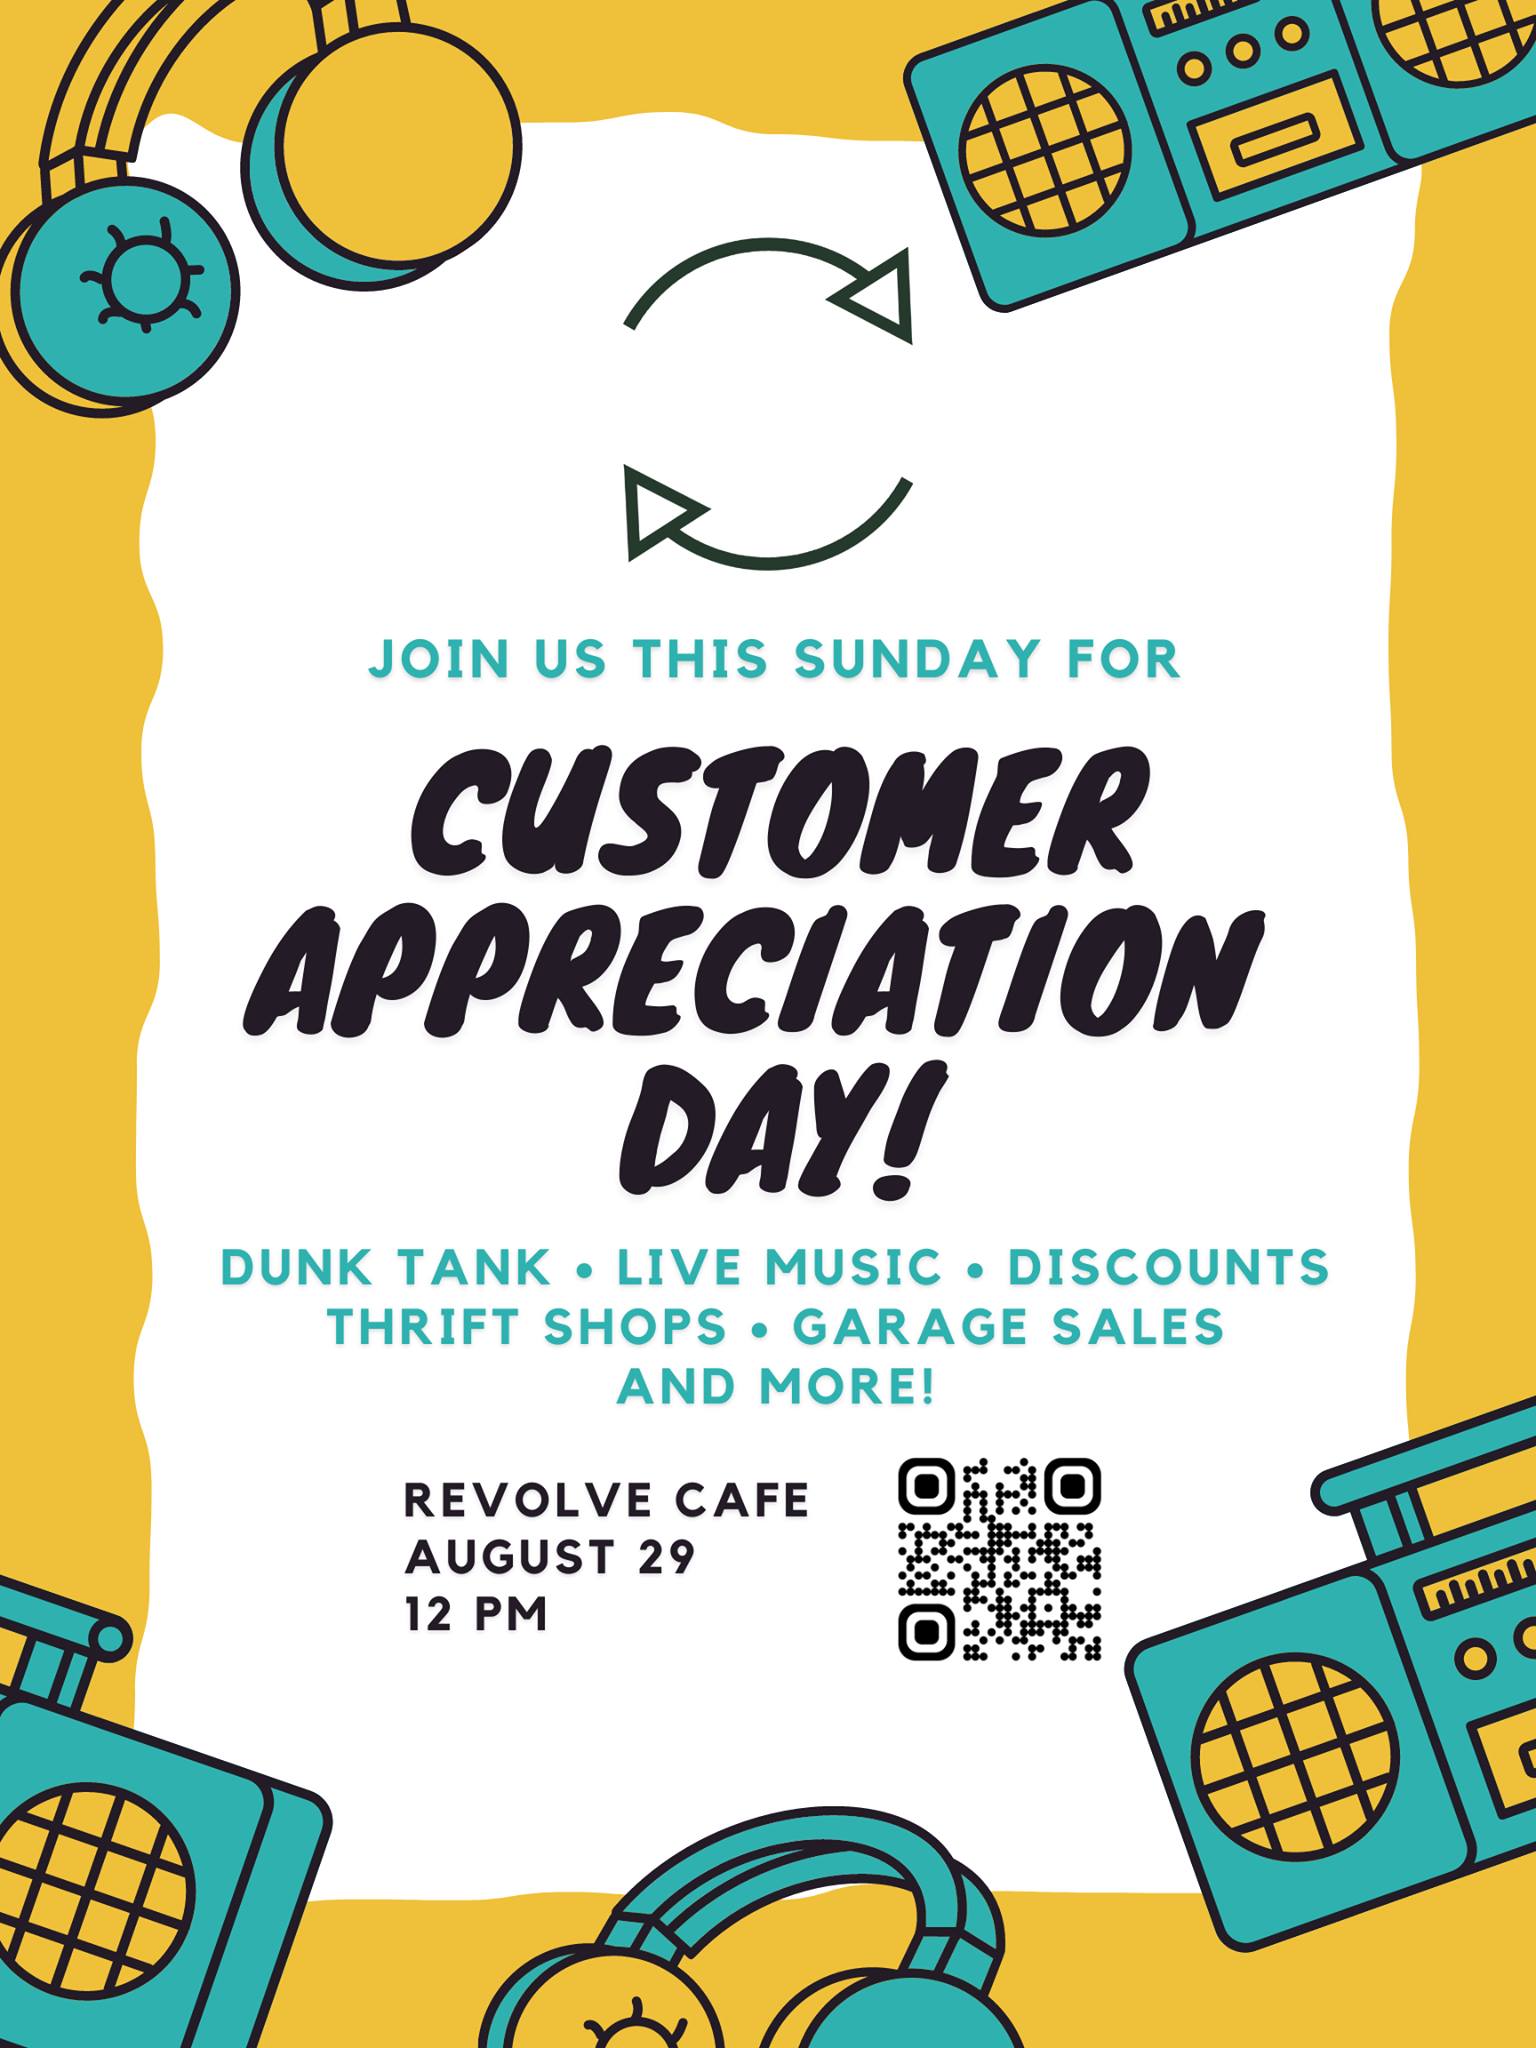 Revolve Cafe's Customer Appreciation Day